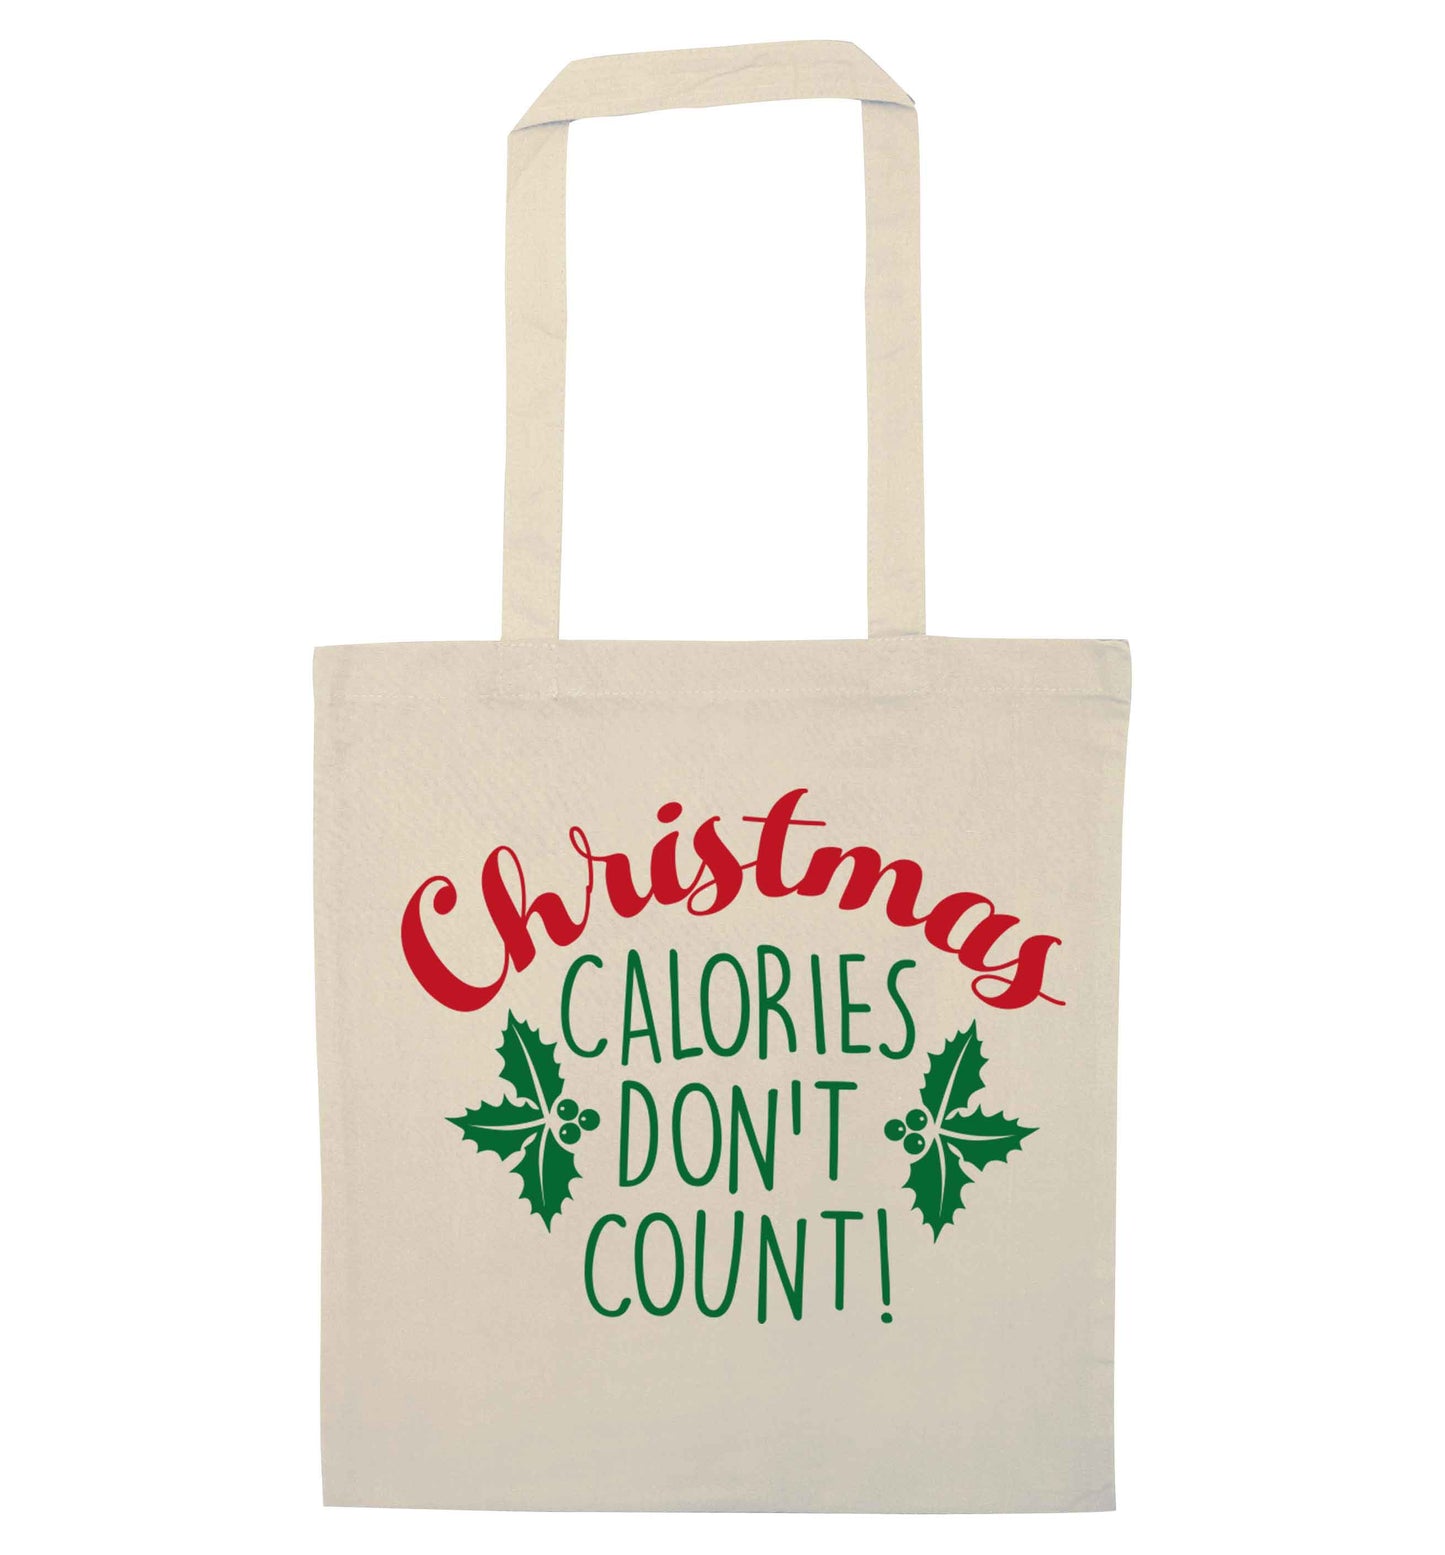 Christmas calories don't count natural tote bag